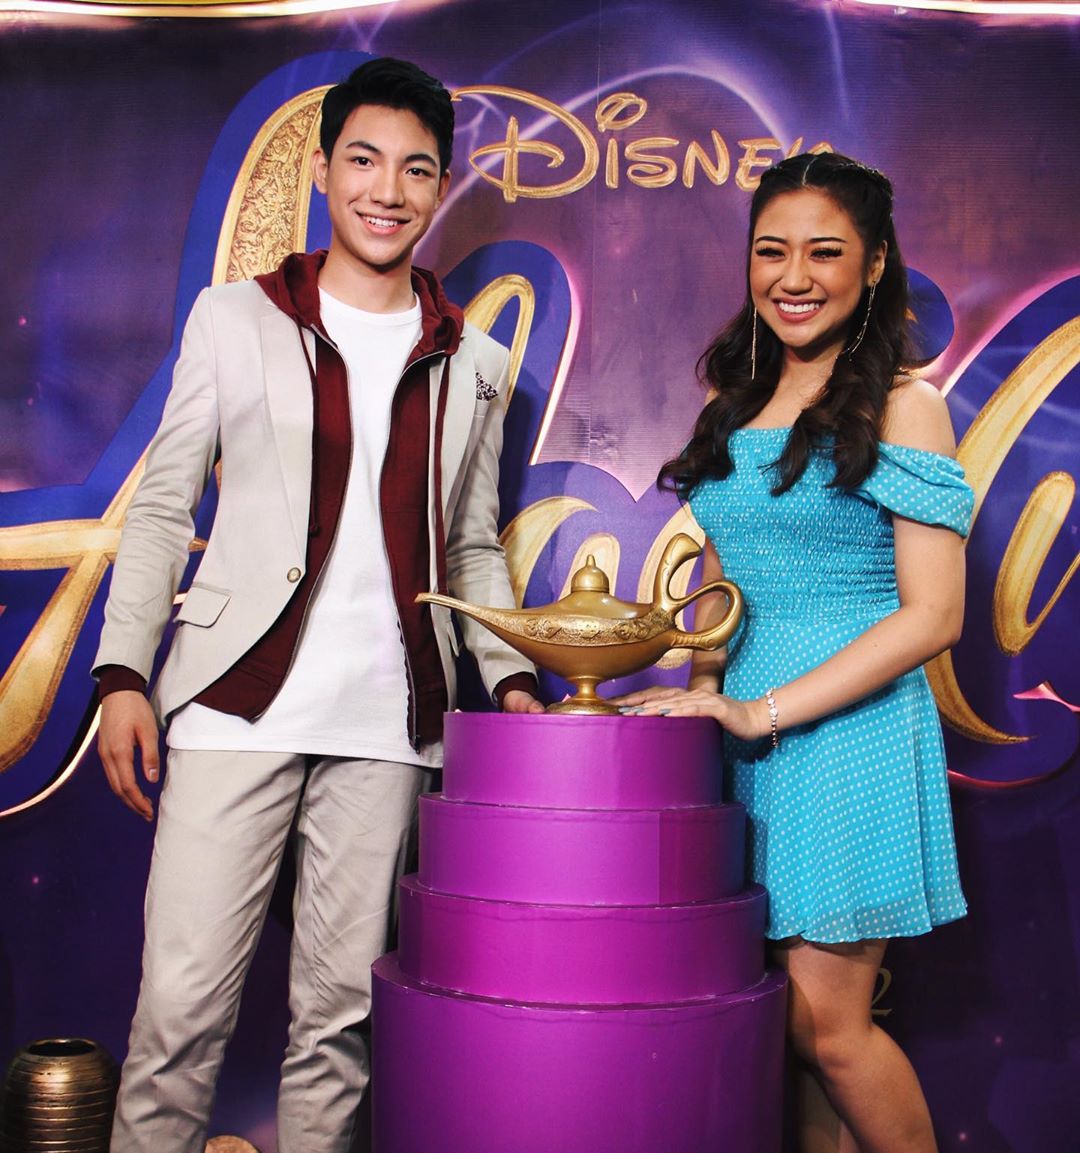 Disney Filipino singers Darren and Morissette